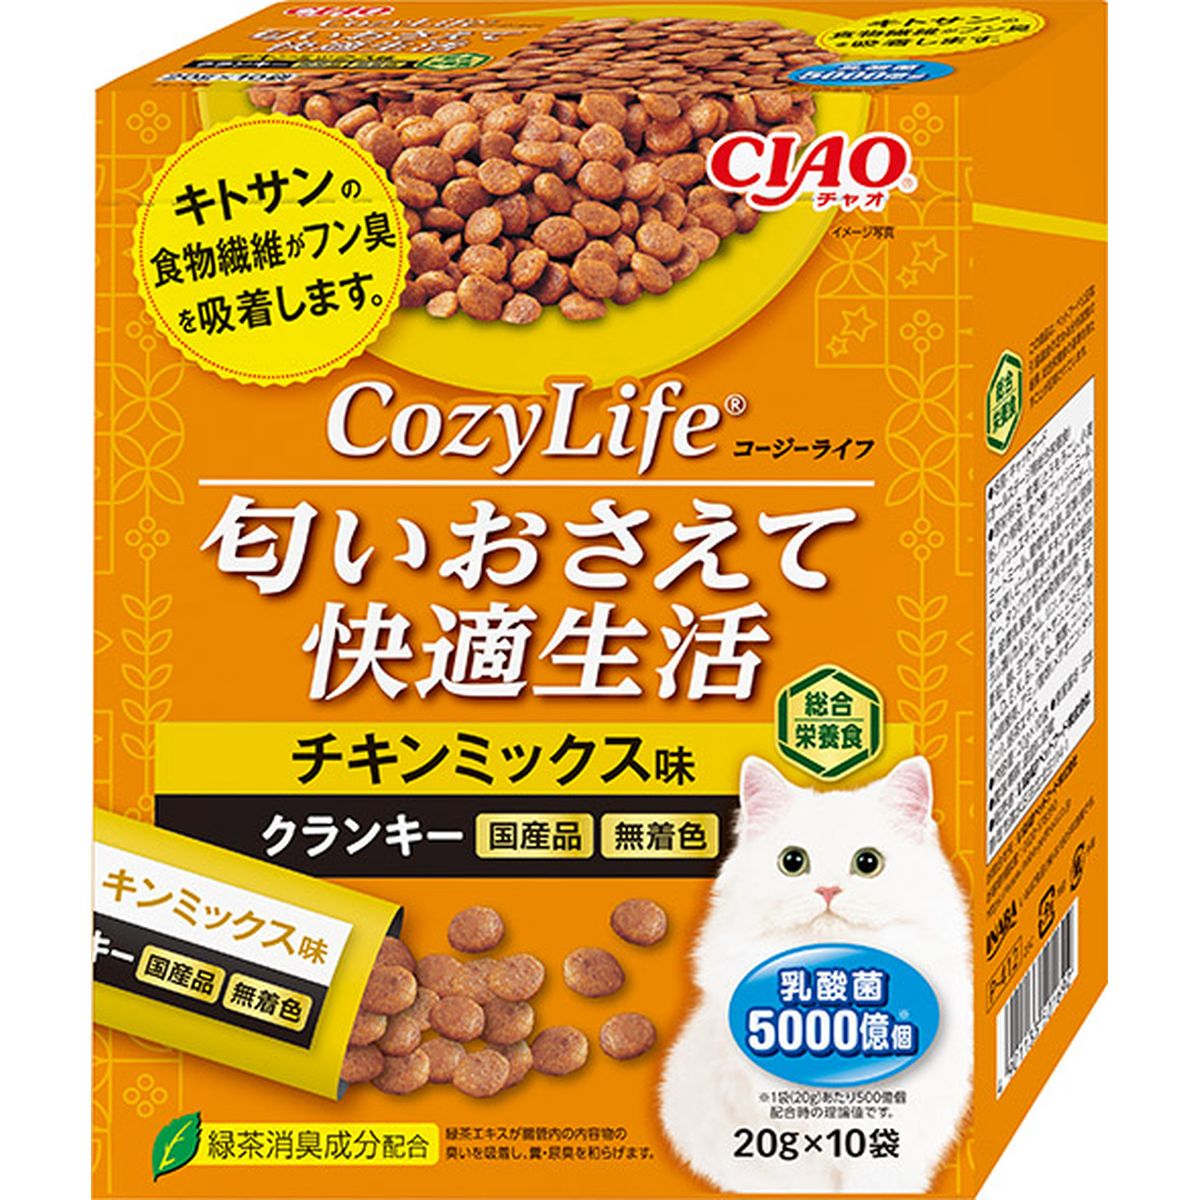 CIAO Cozy Life BOX チキンミックス味 20g×10袋×12